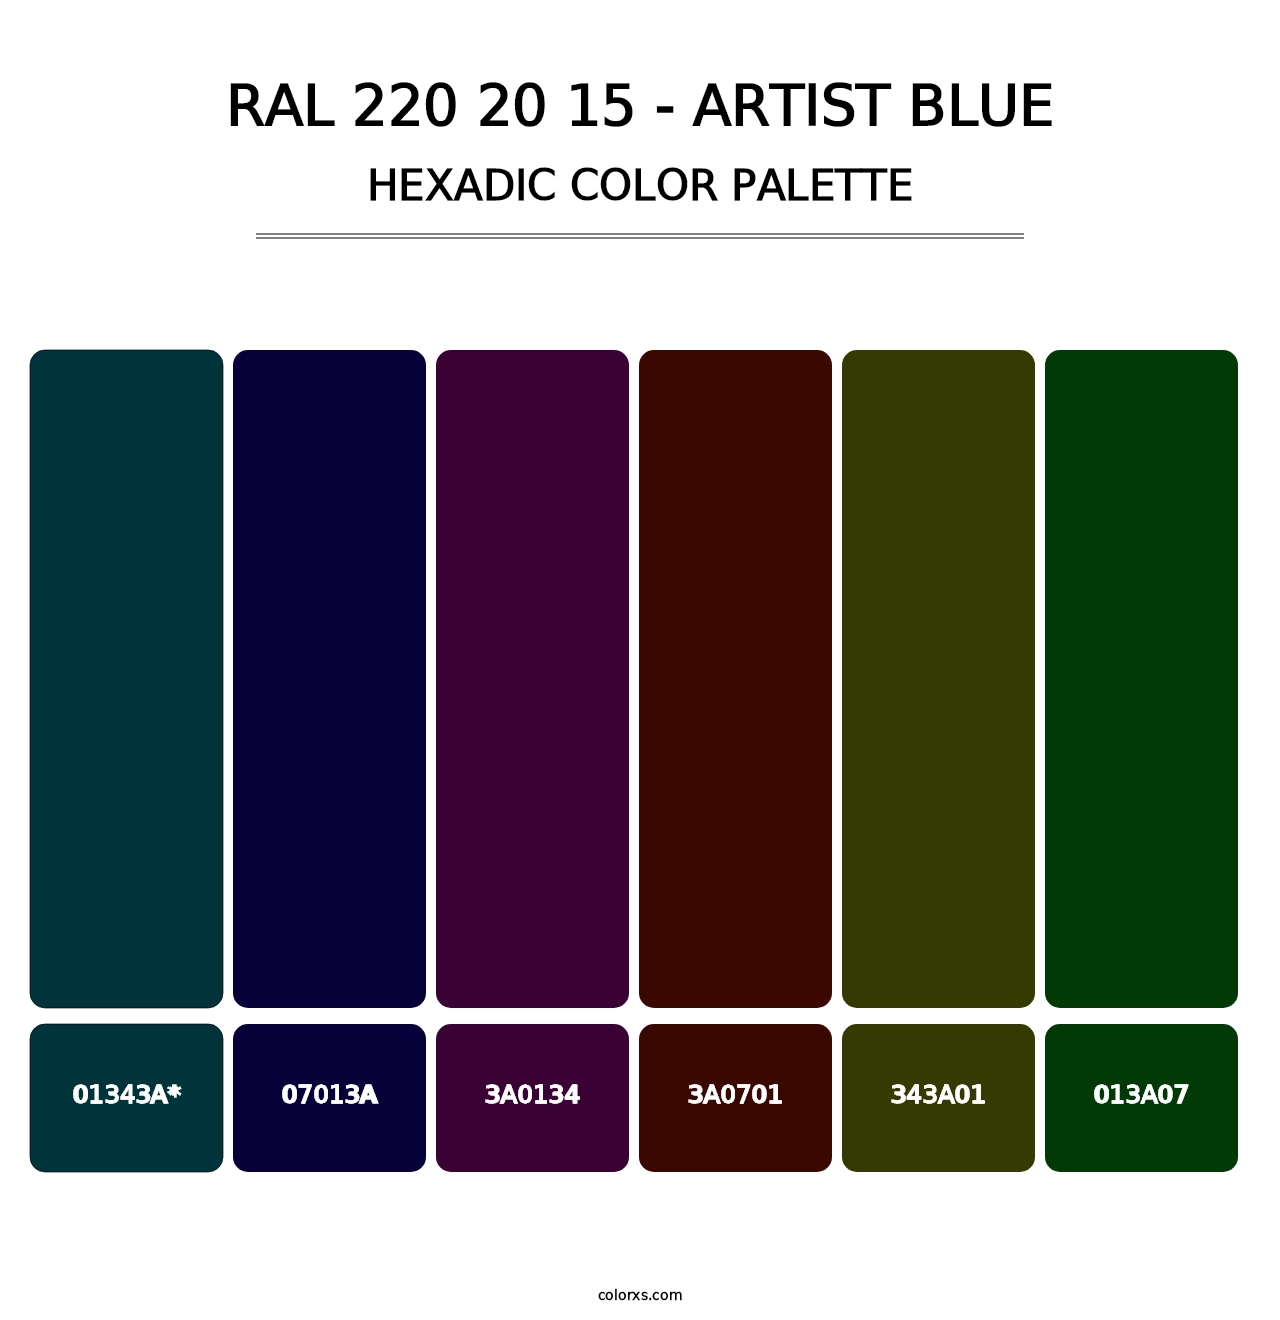 RAL 220 20 15 - Artist Blue - Hexadic Color Palette